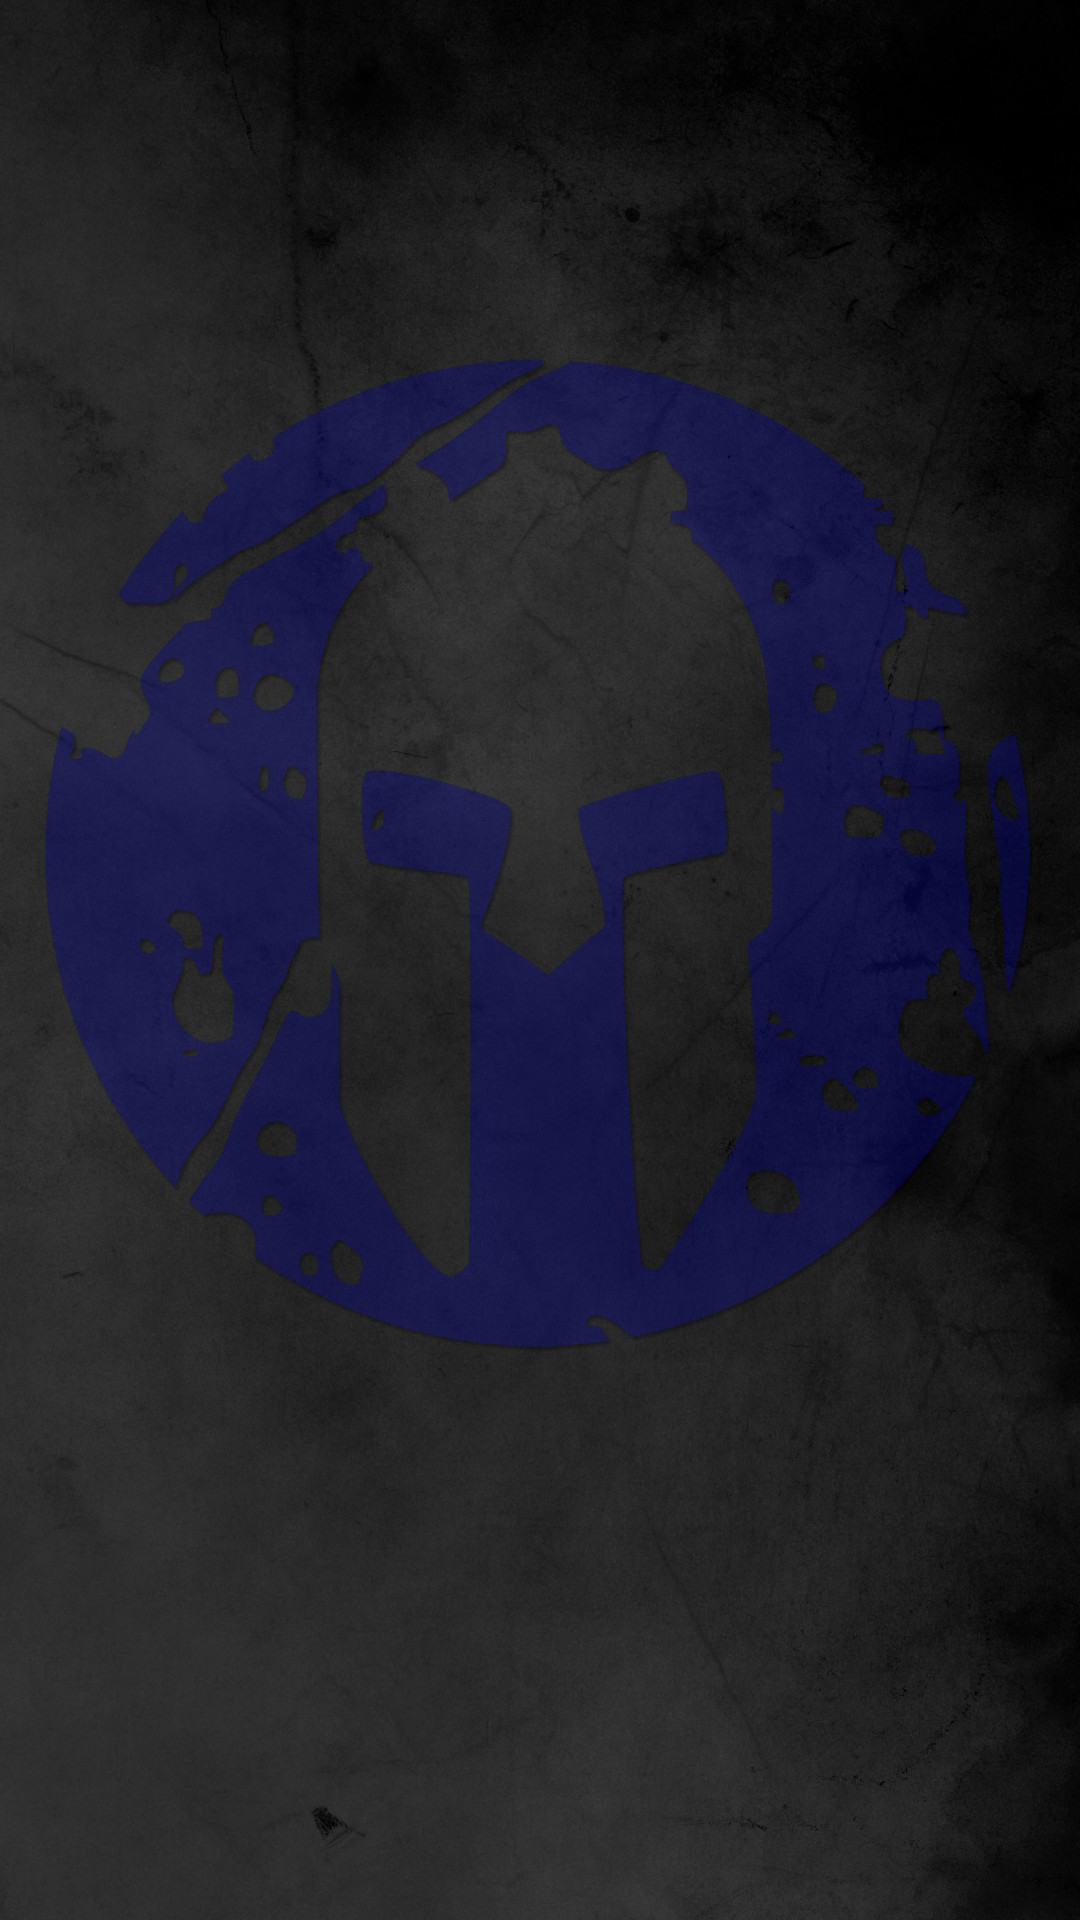 spartan race wallpaper,blue,electric blue,symbol,logo,font